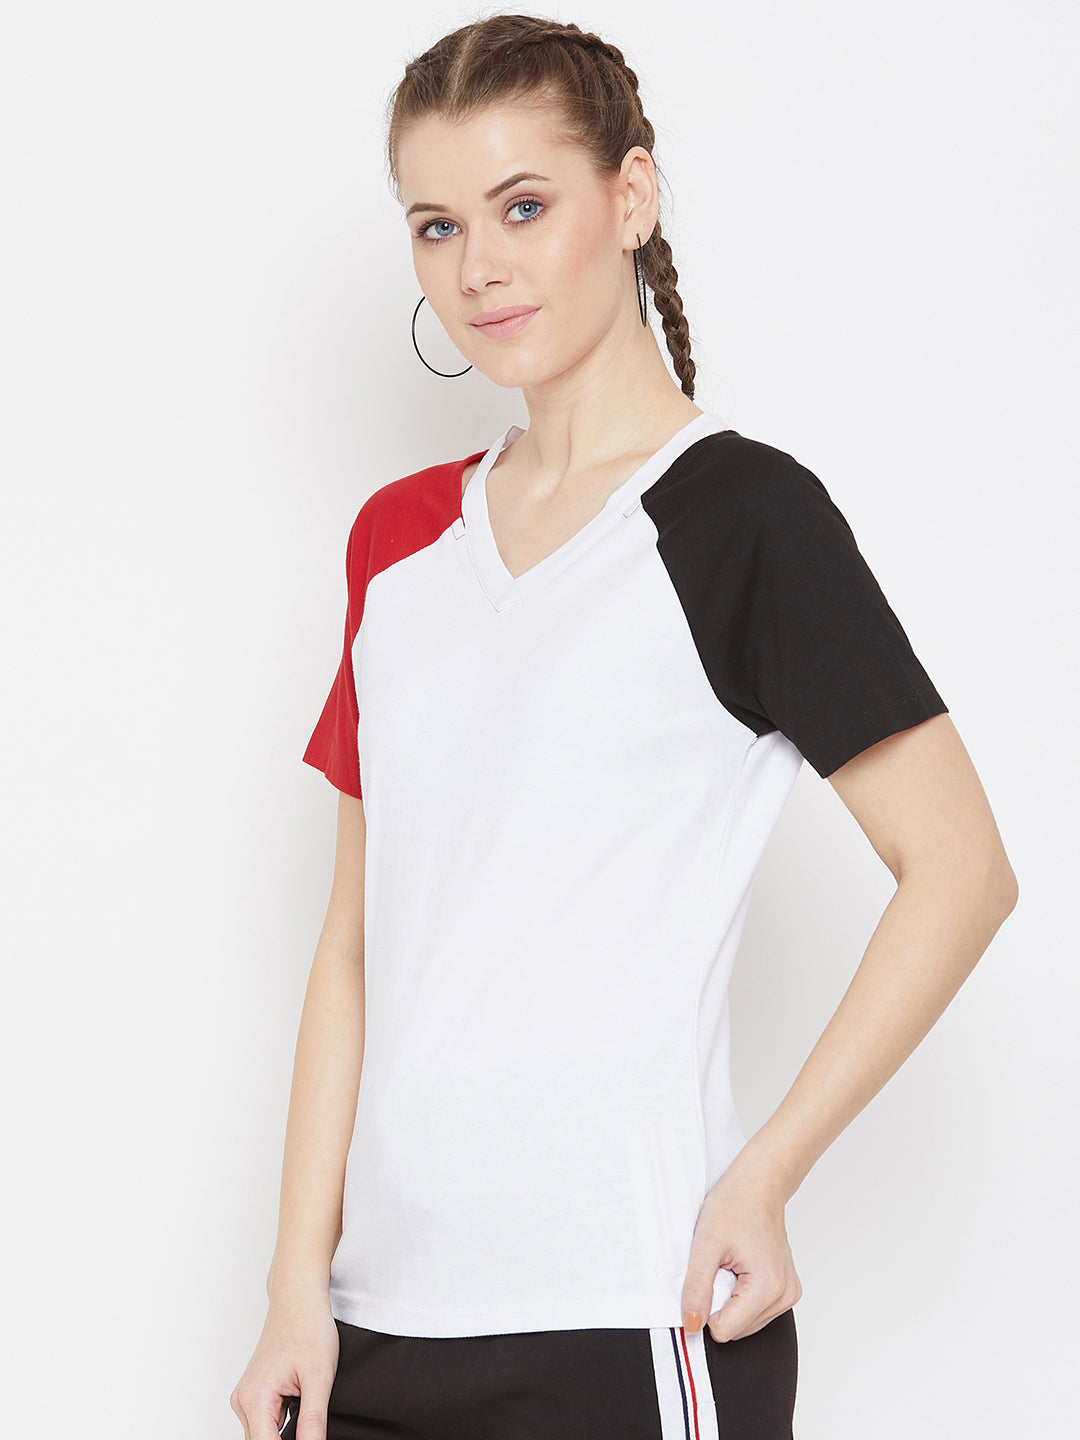 White/Black/Red Half Sleeve V Neck Top